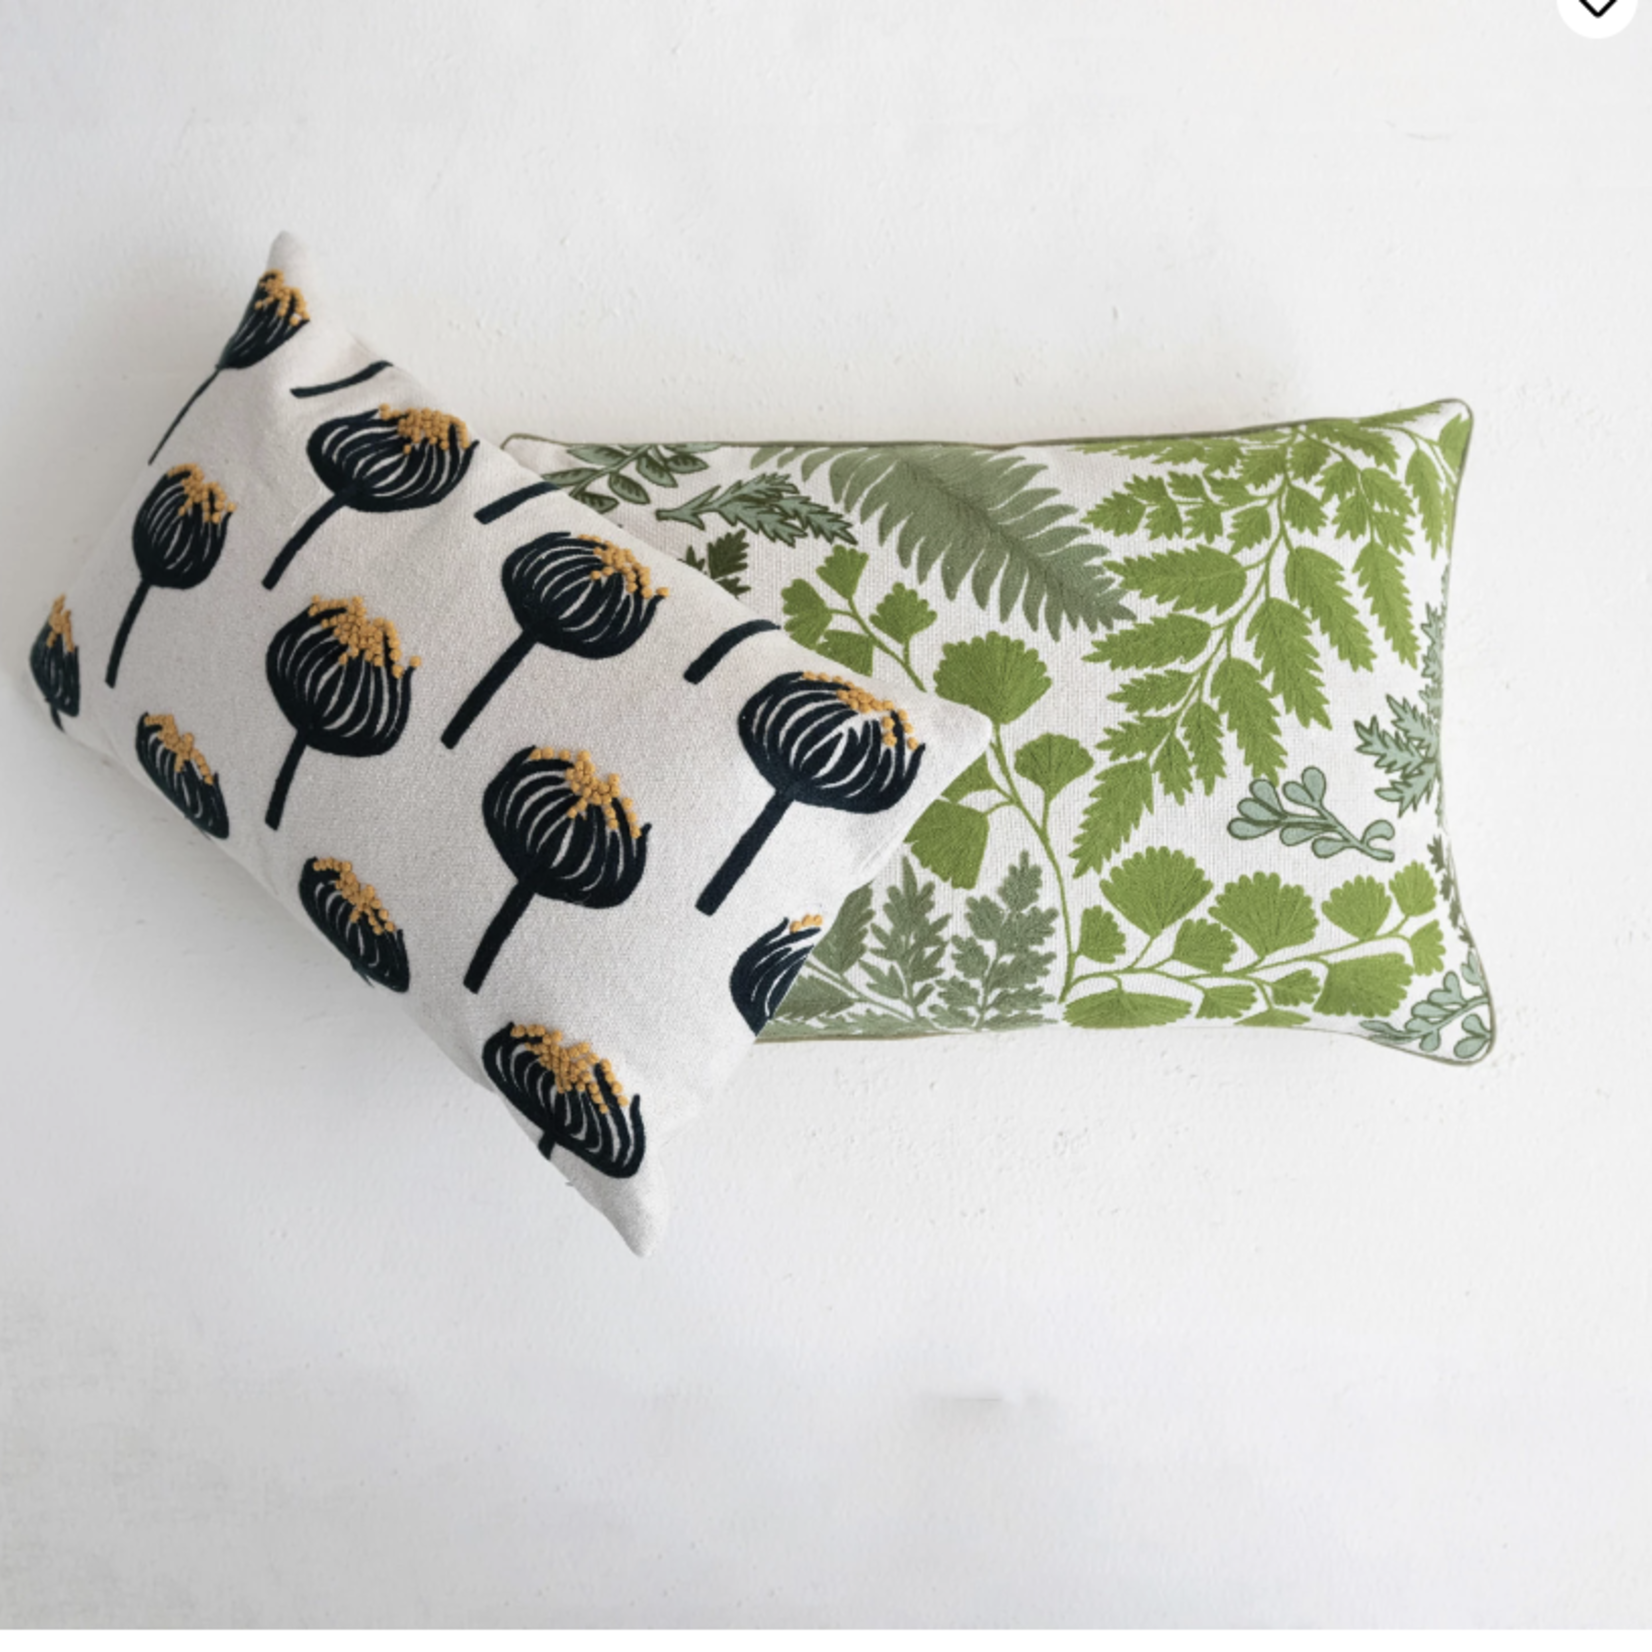 Creative Co-Op 24" x 16" Cotton Embroidered Lumbar Pillow w/ Botanicals, Down Fill